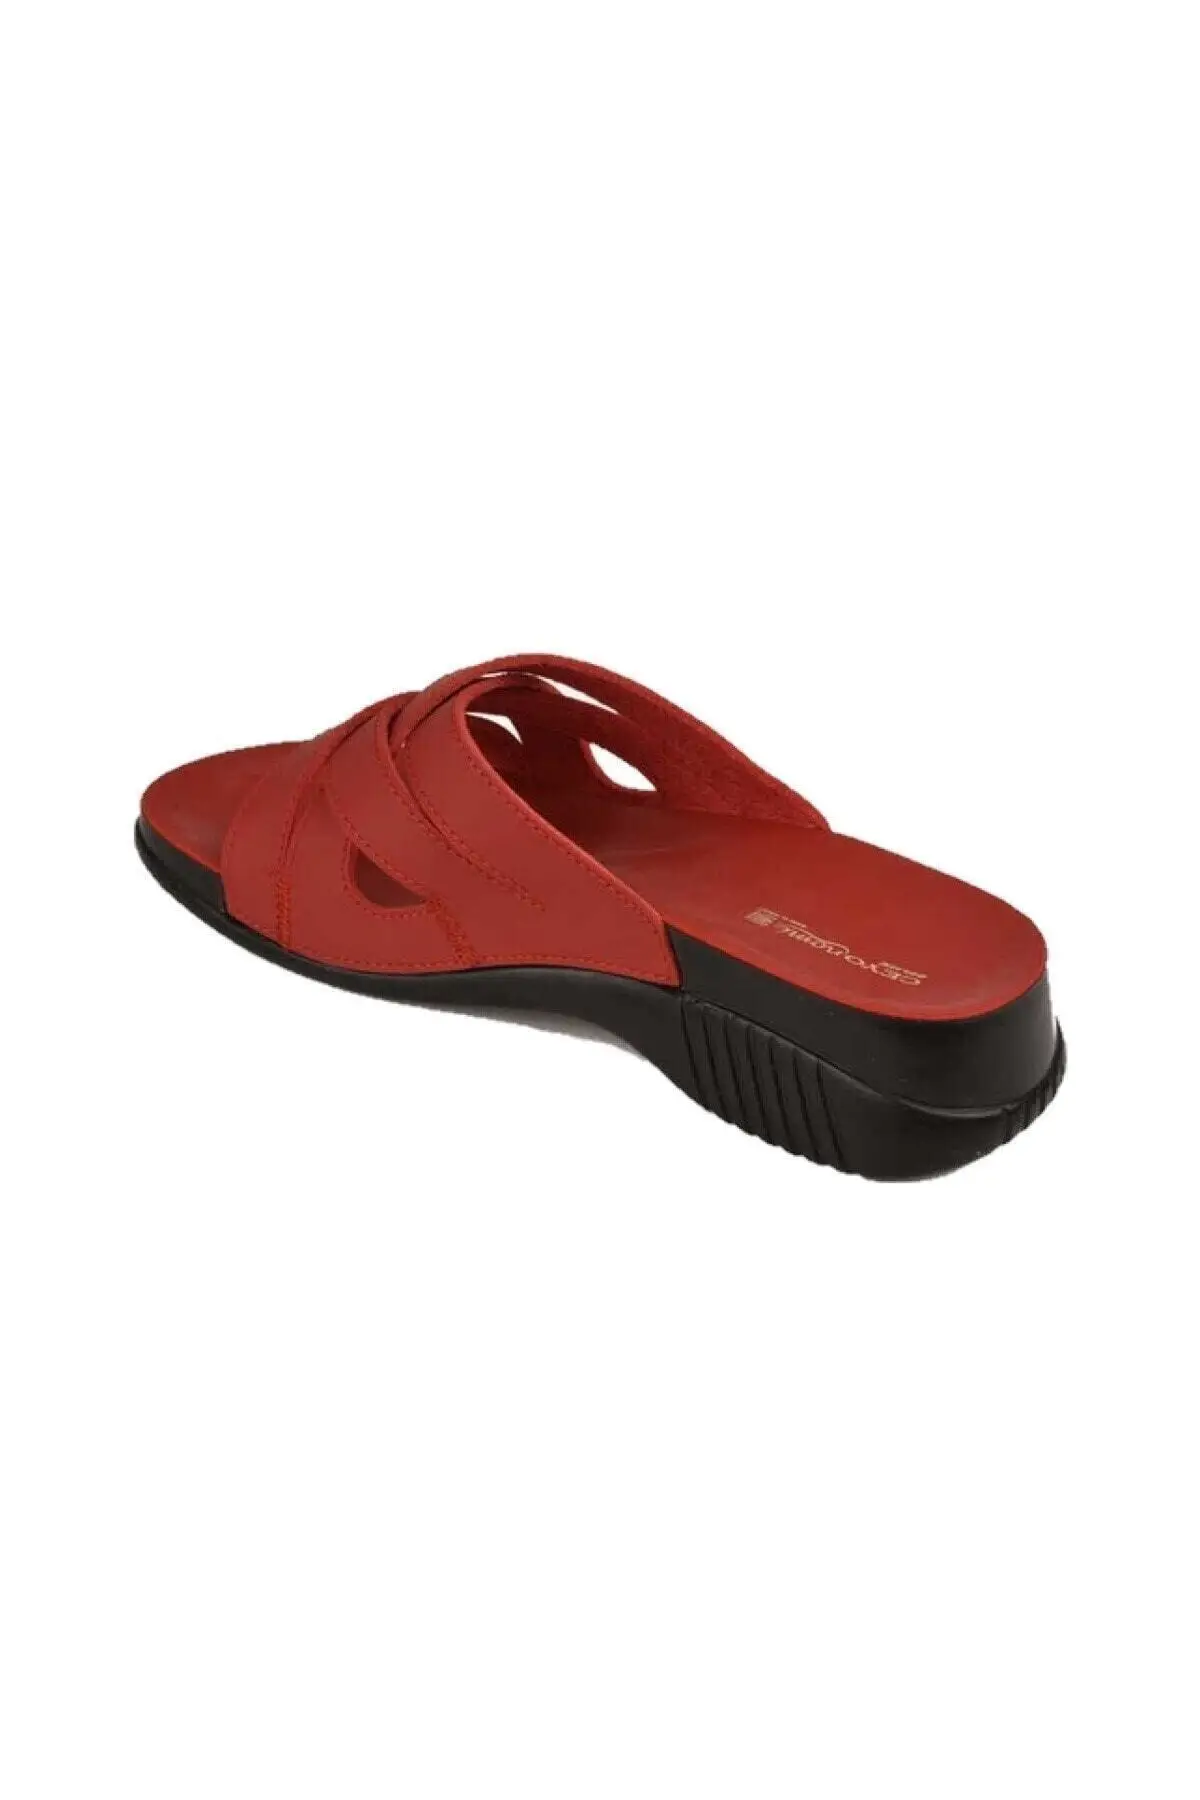 

Women Sandals crystal Belize- Fashion Summer Slipper Indoor Outdoor Flip Flops Beach Shoes Female Slippers Platform Casual